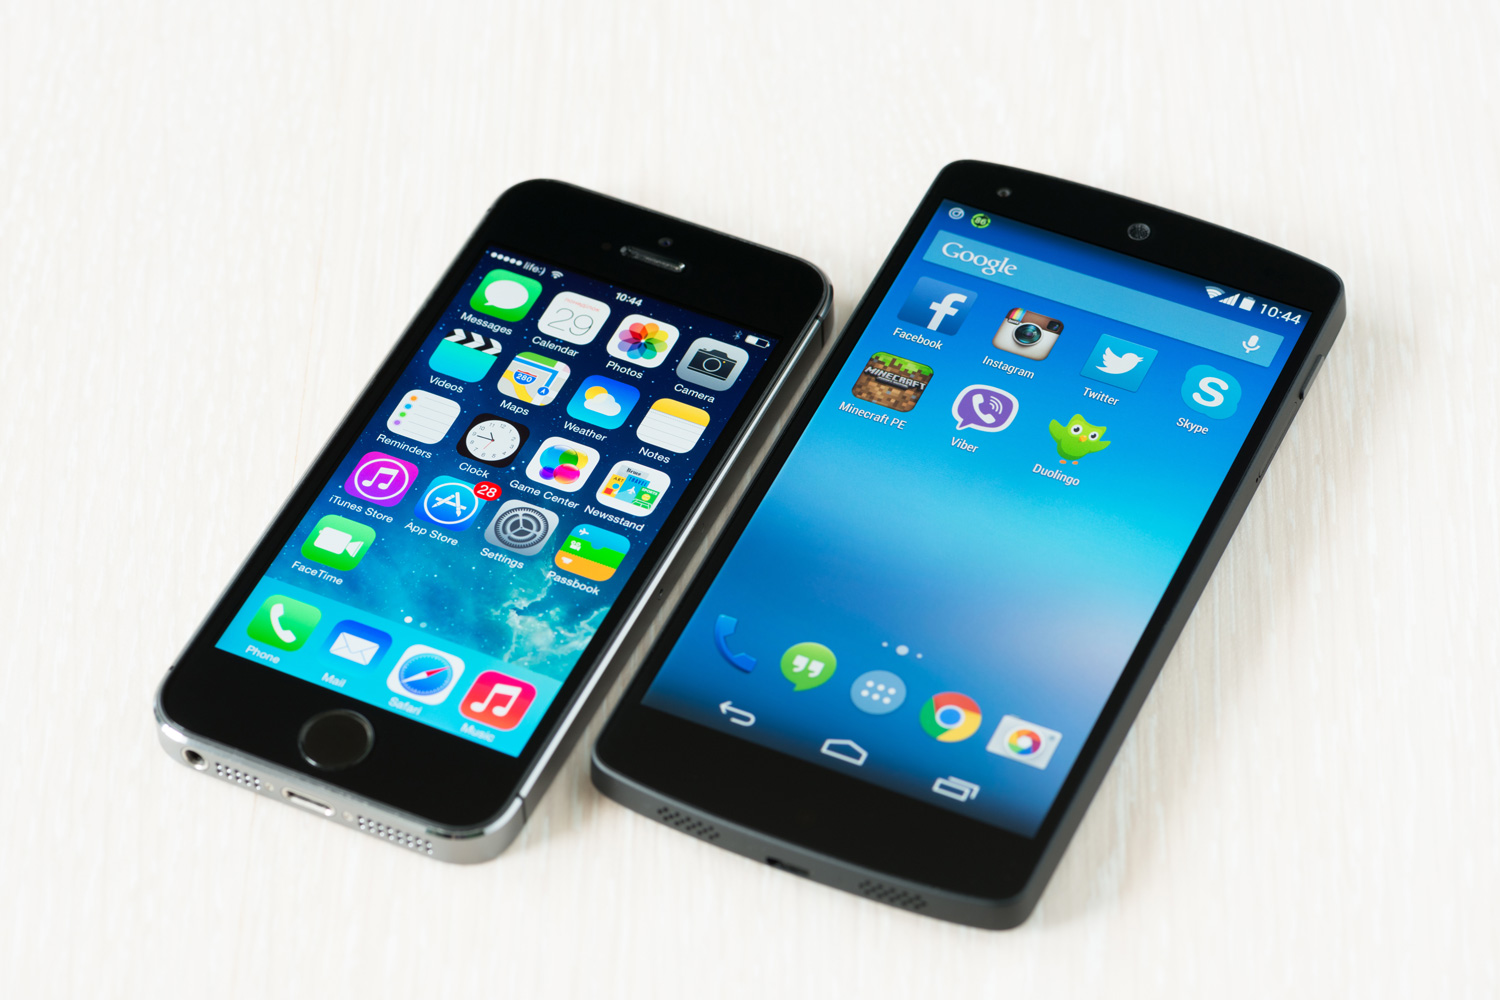 iphones android crashes blancco study iphone transer comparison apple google smartphones nexus s5 s6 samsung htc